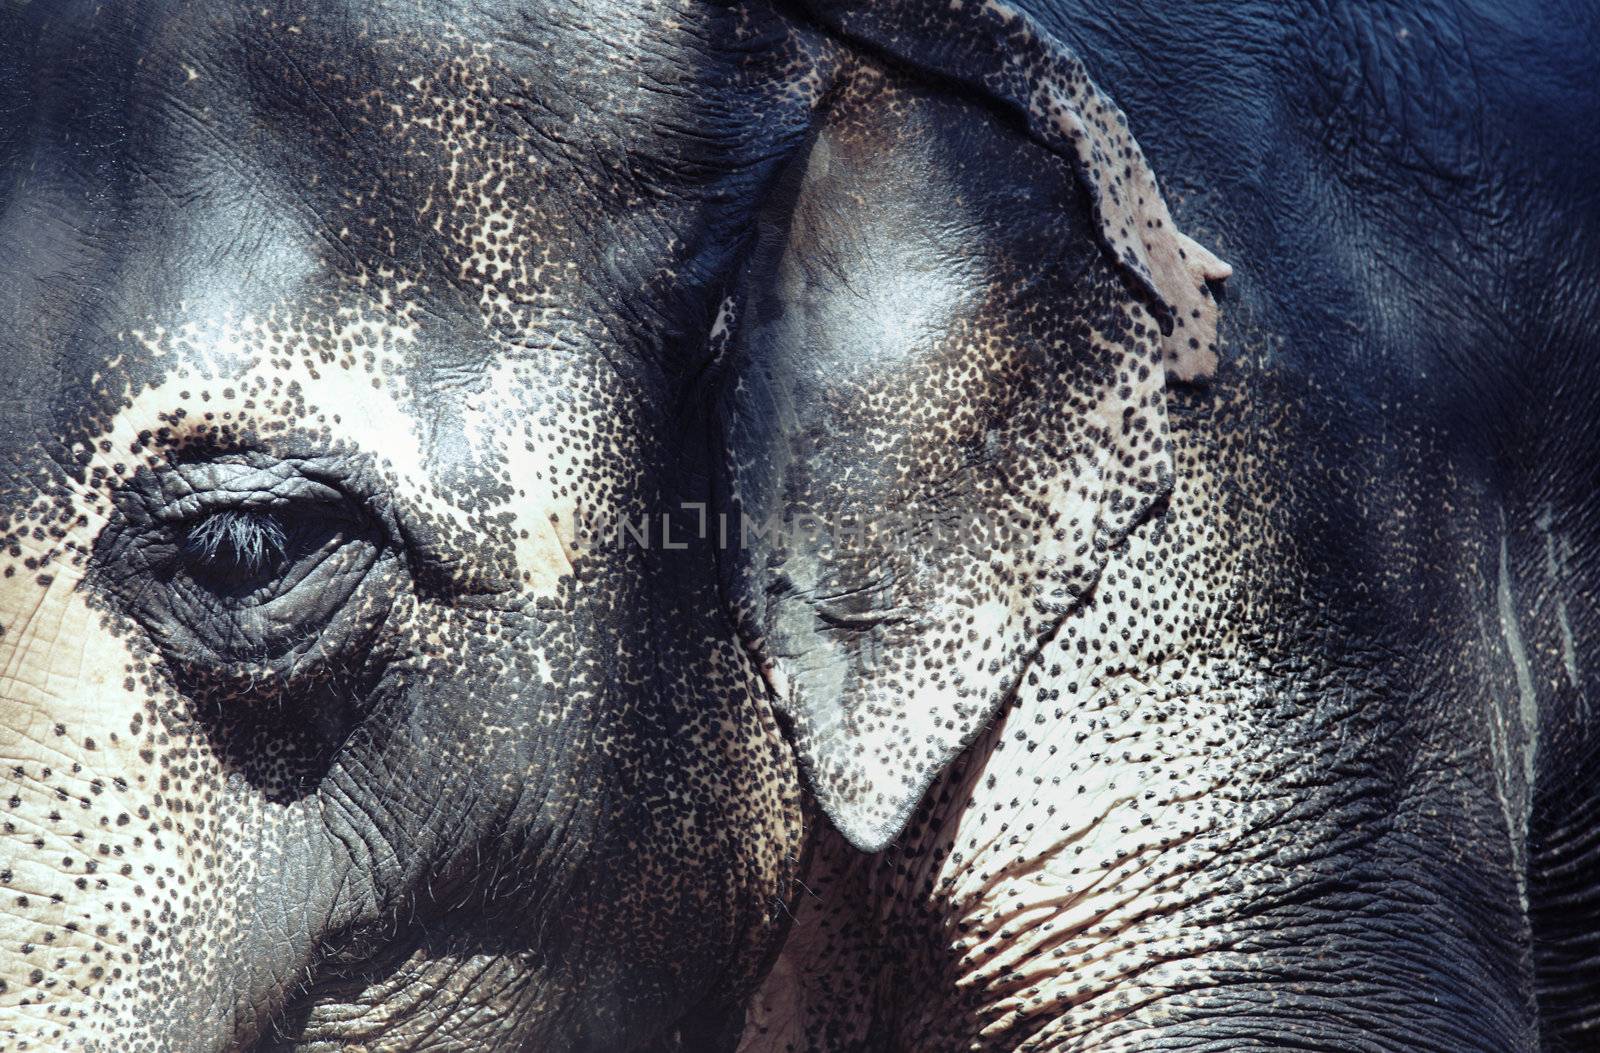 Close-up photo of the elephant with spotty skin. Horizontal photo